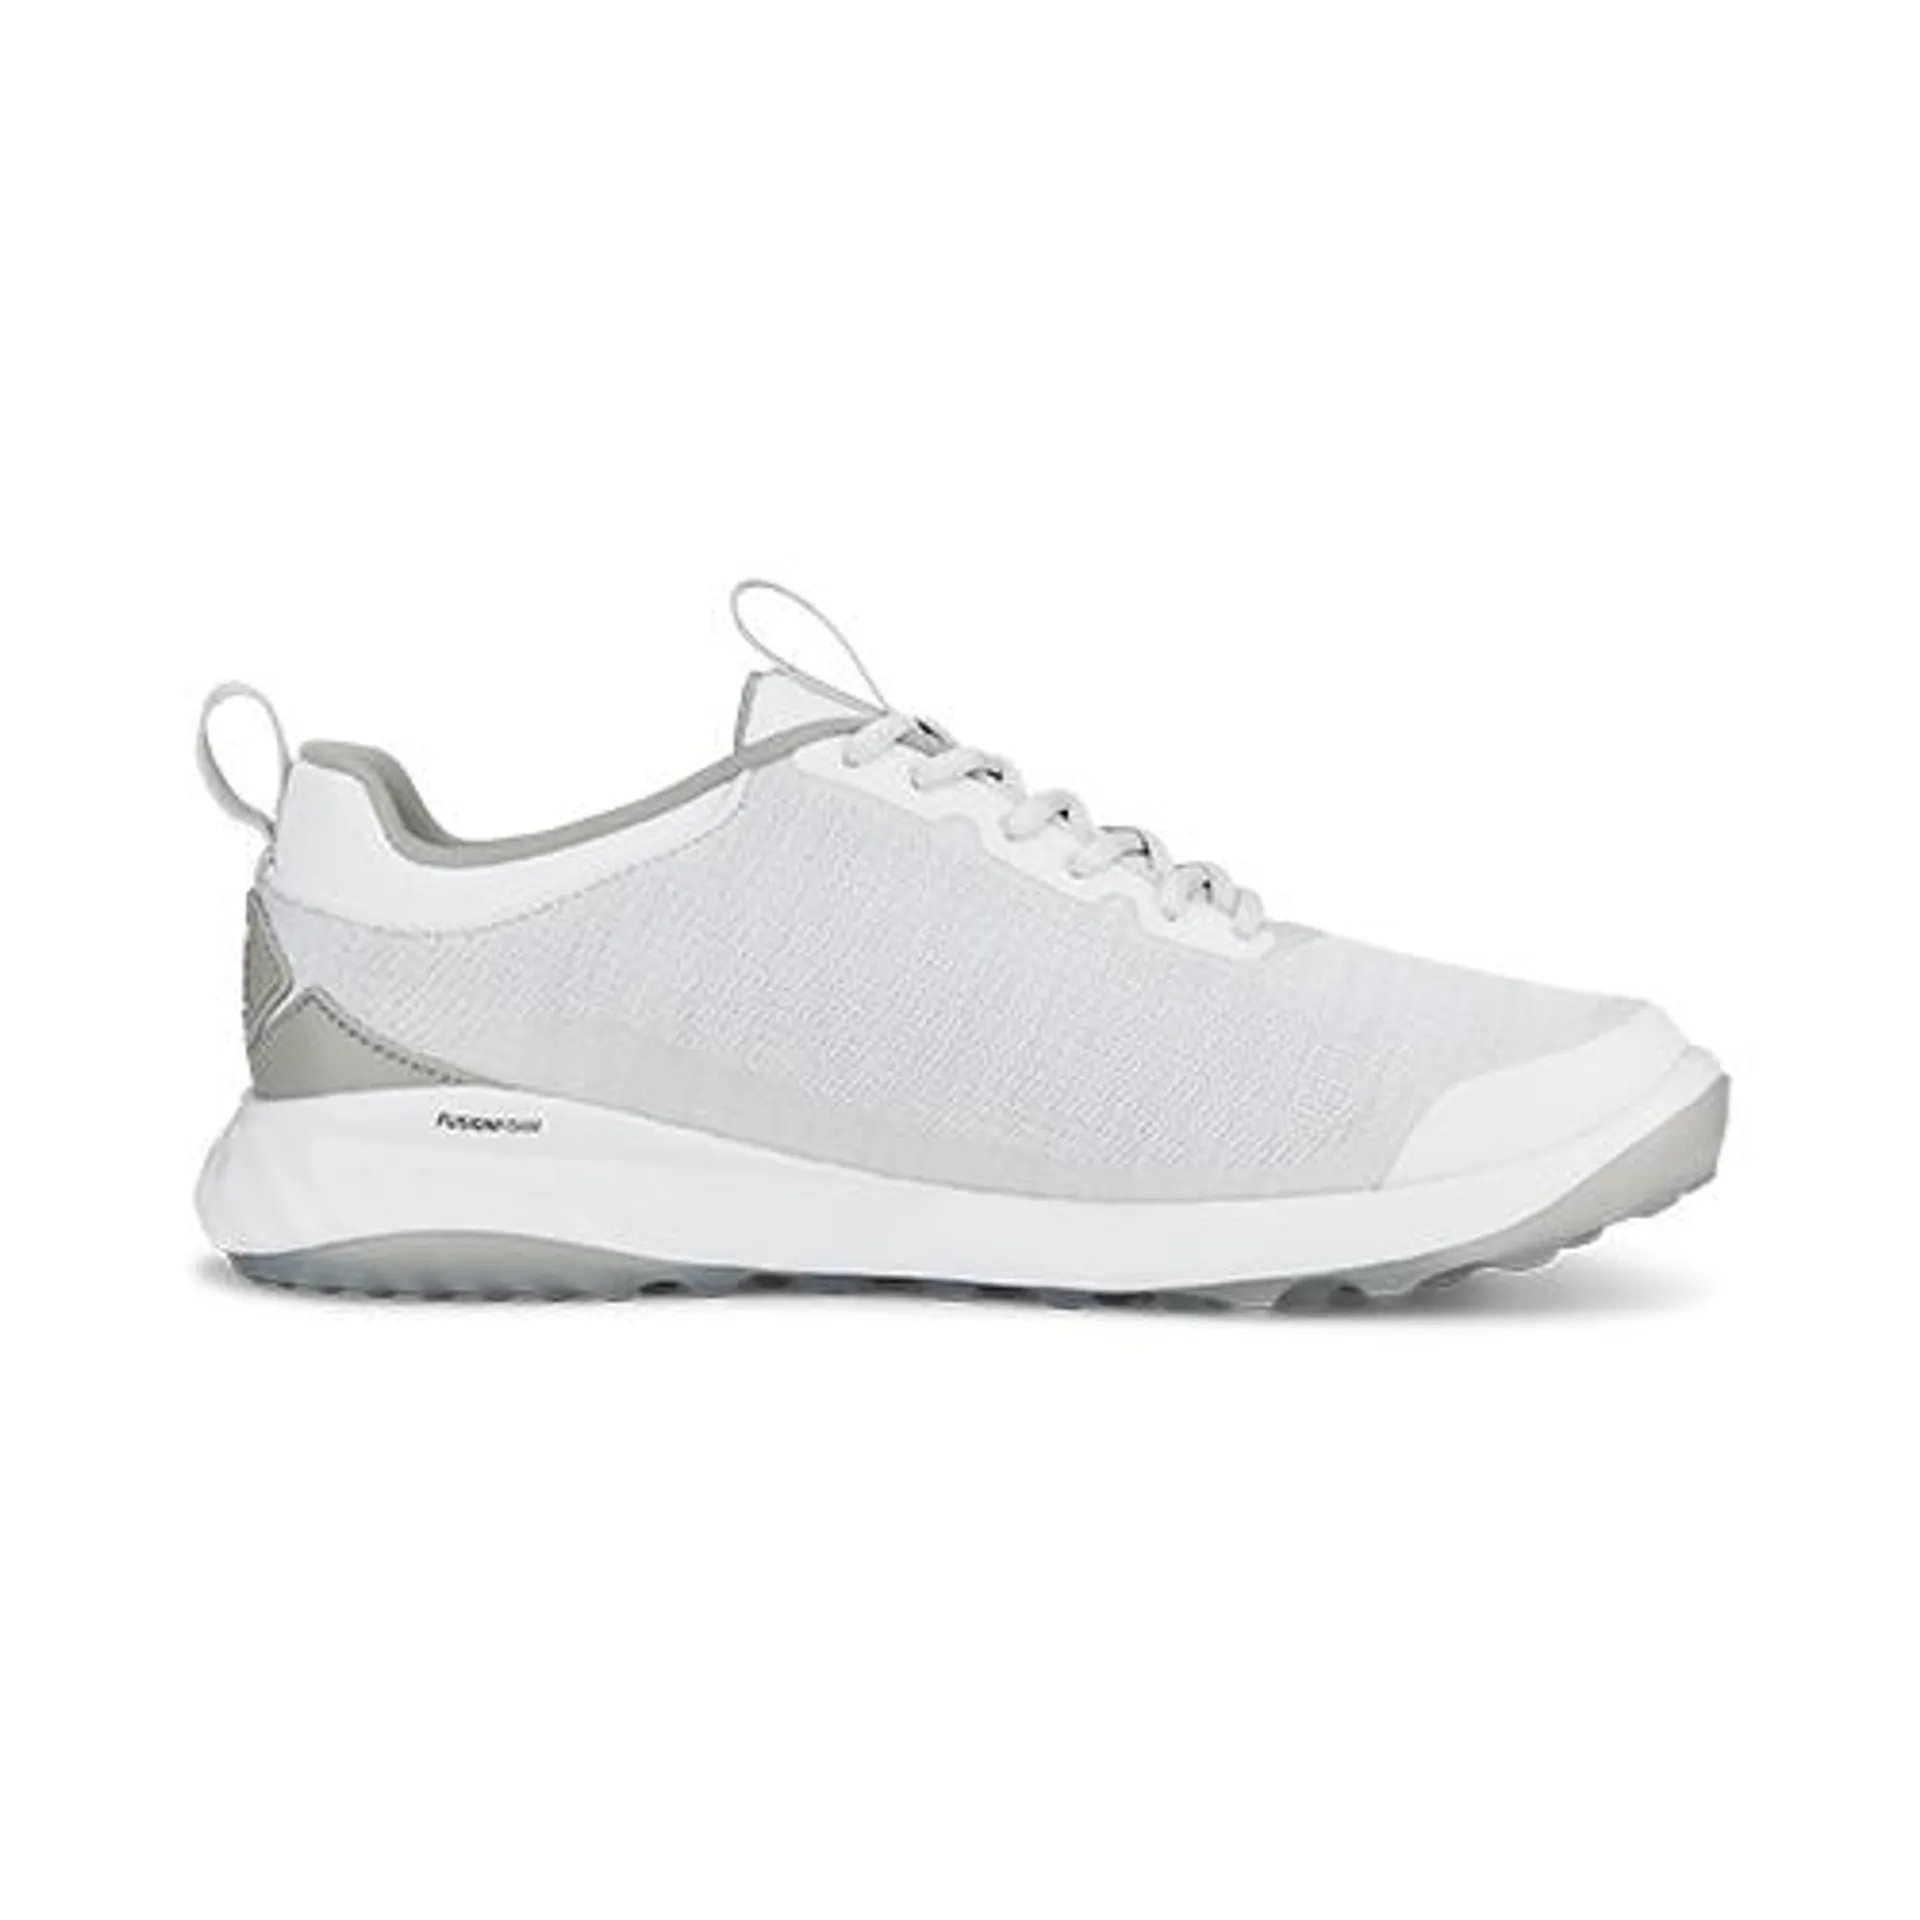 Puma FUSION PRO Golf Shoes – White/Silver 37704105